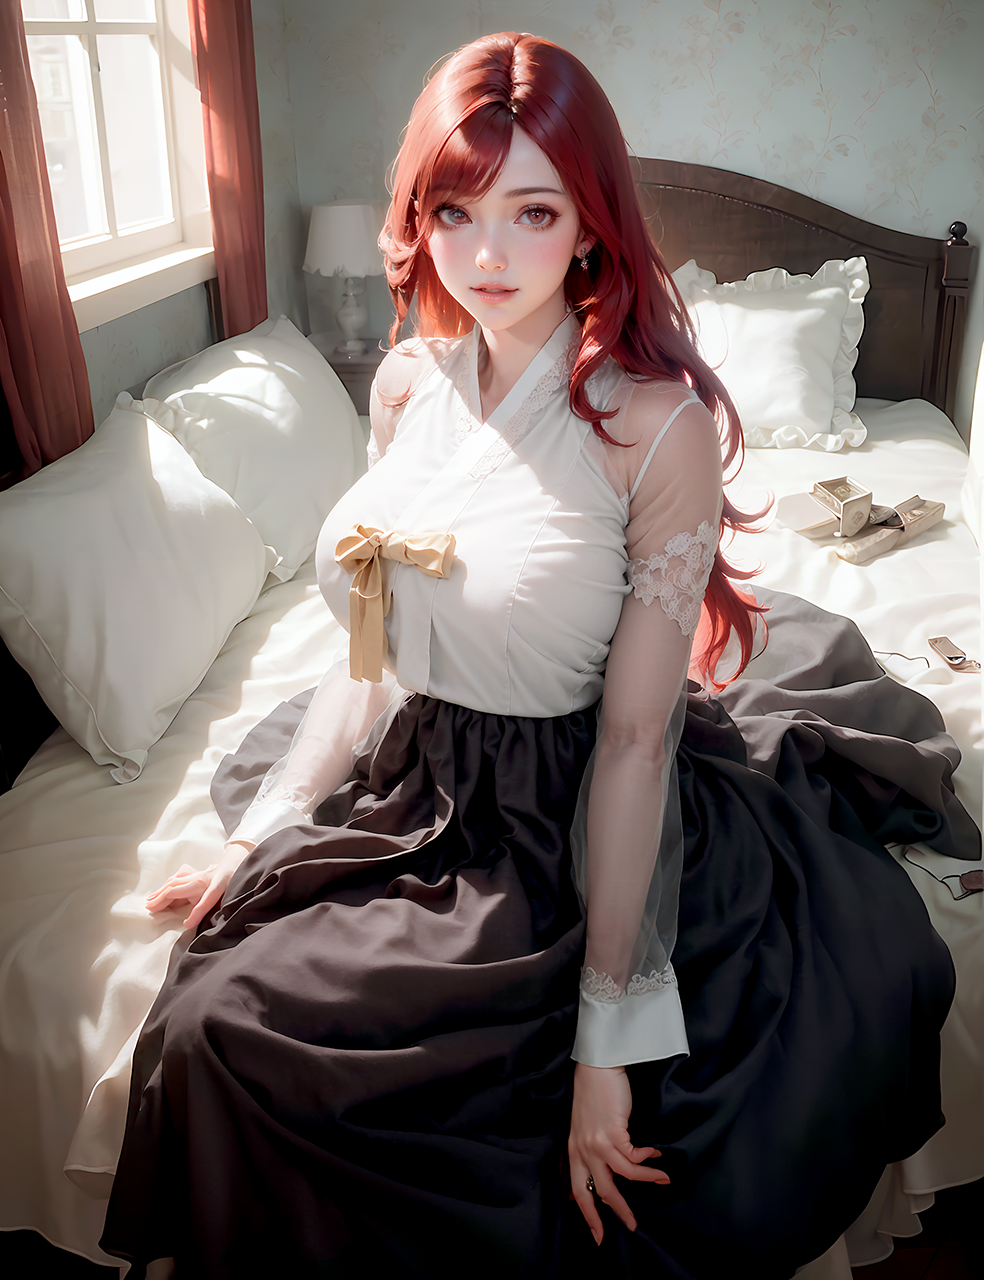 Ai Art Digital Art Artwork Illustration Women Sitting Redhead Bed Vertical Looking At Viewer Pillow 984x1280